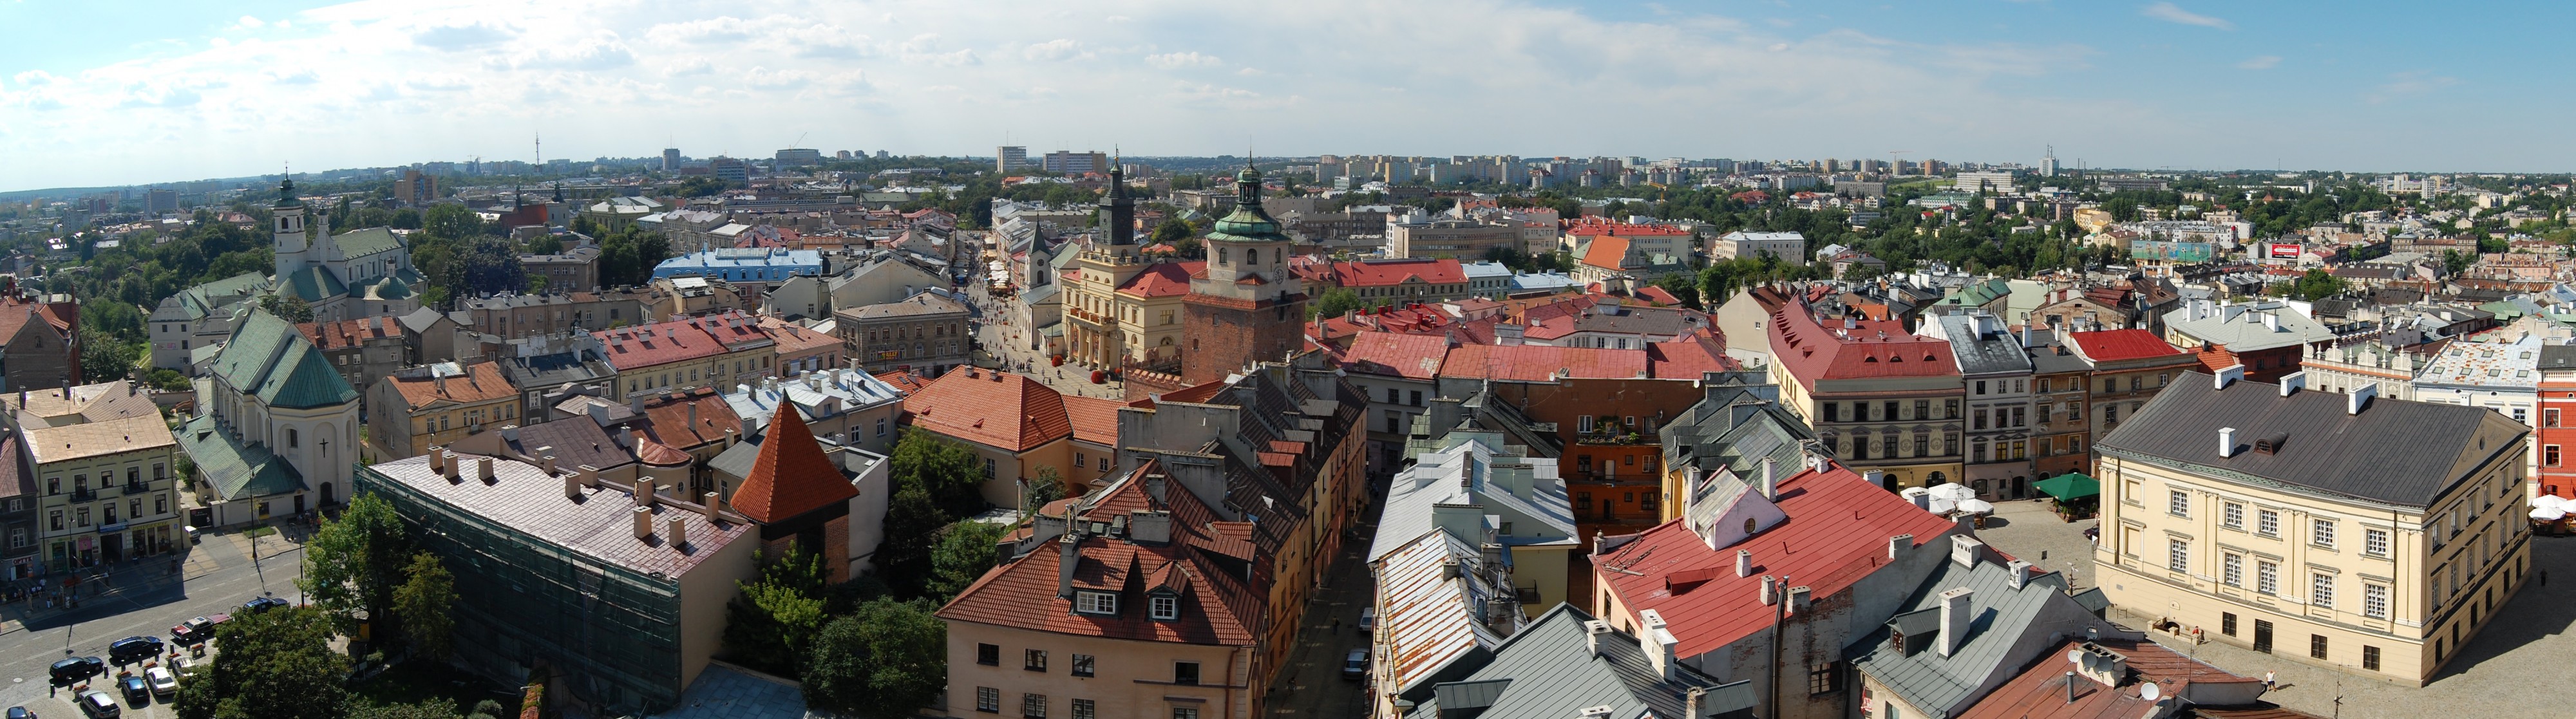 Lublin panorama 2009